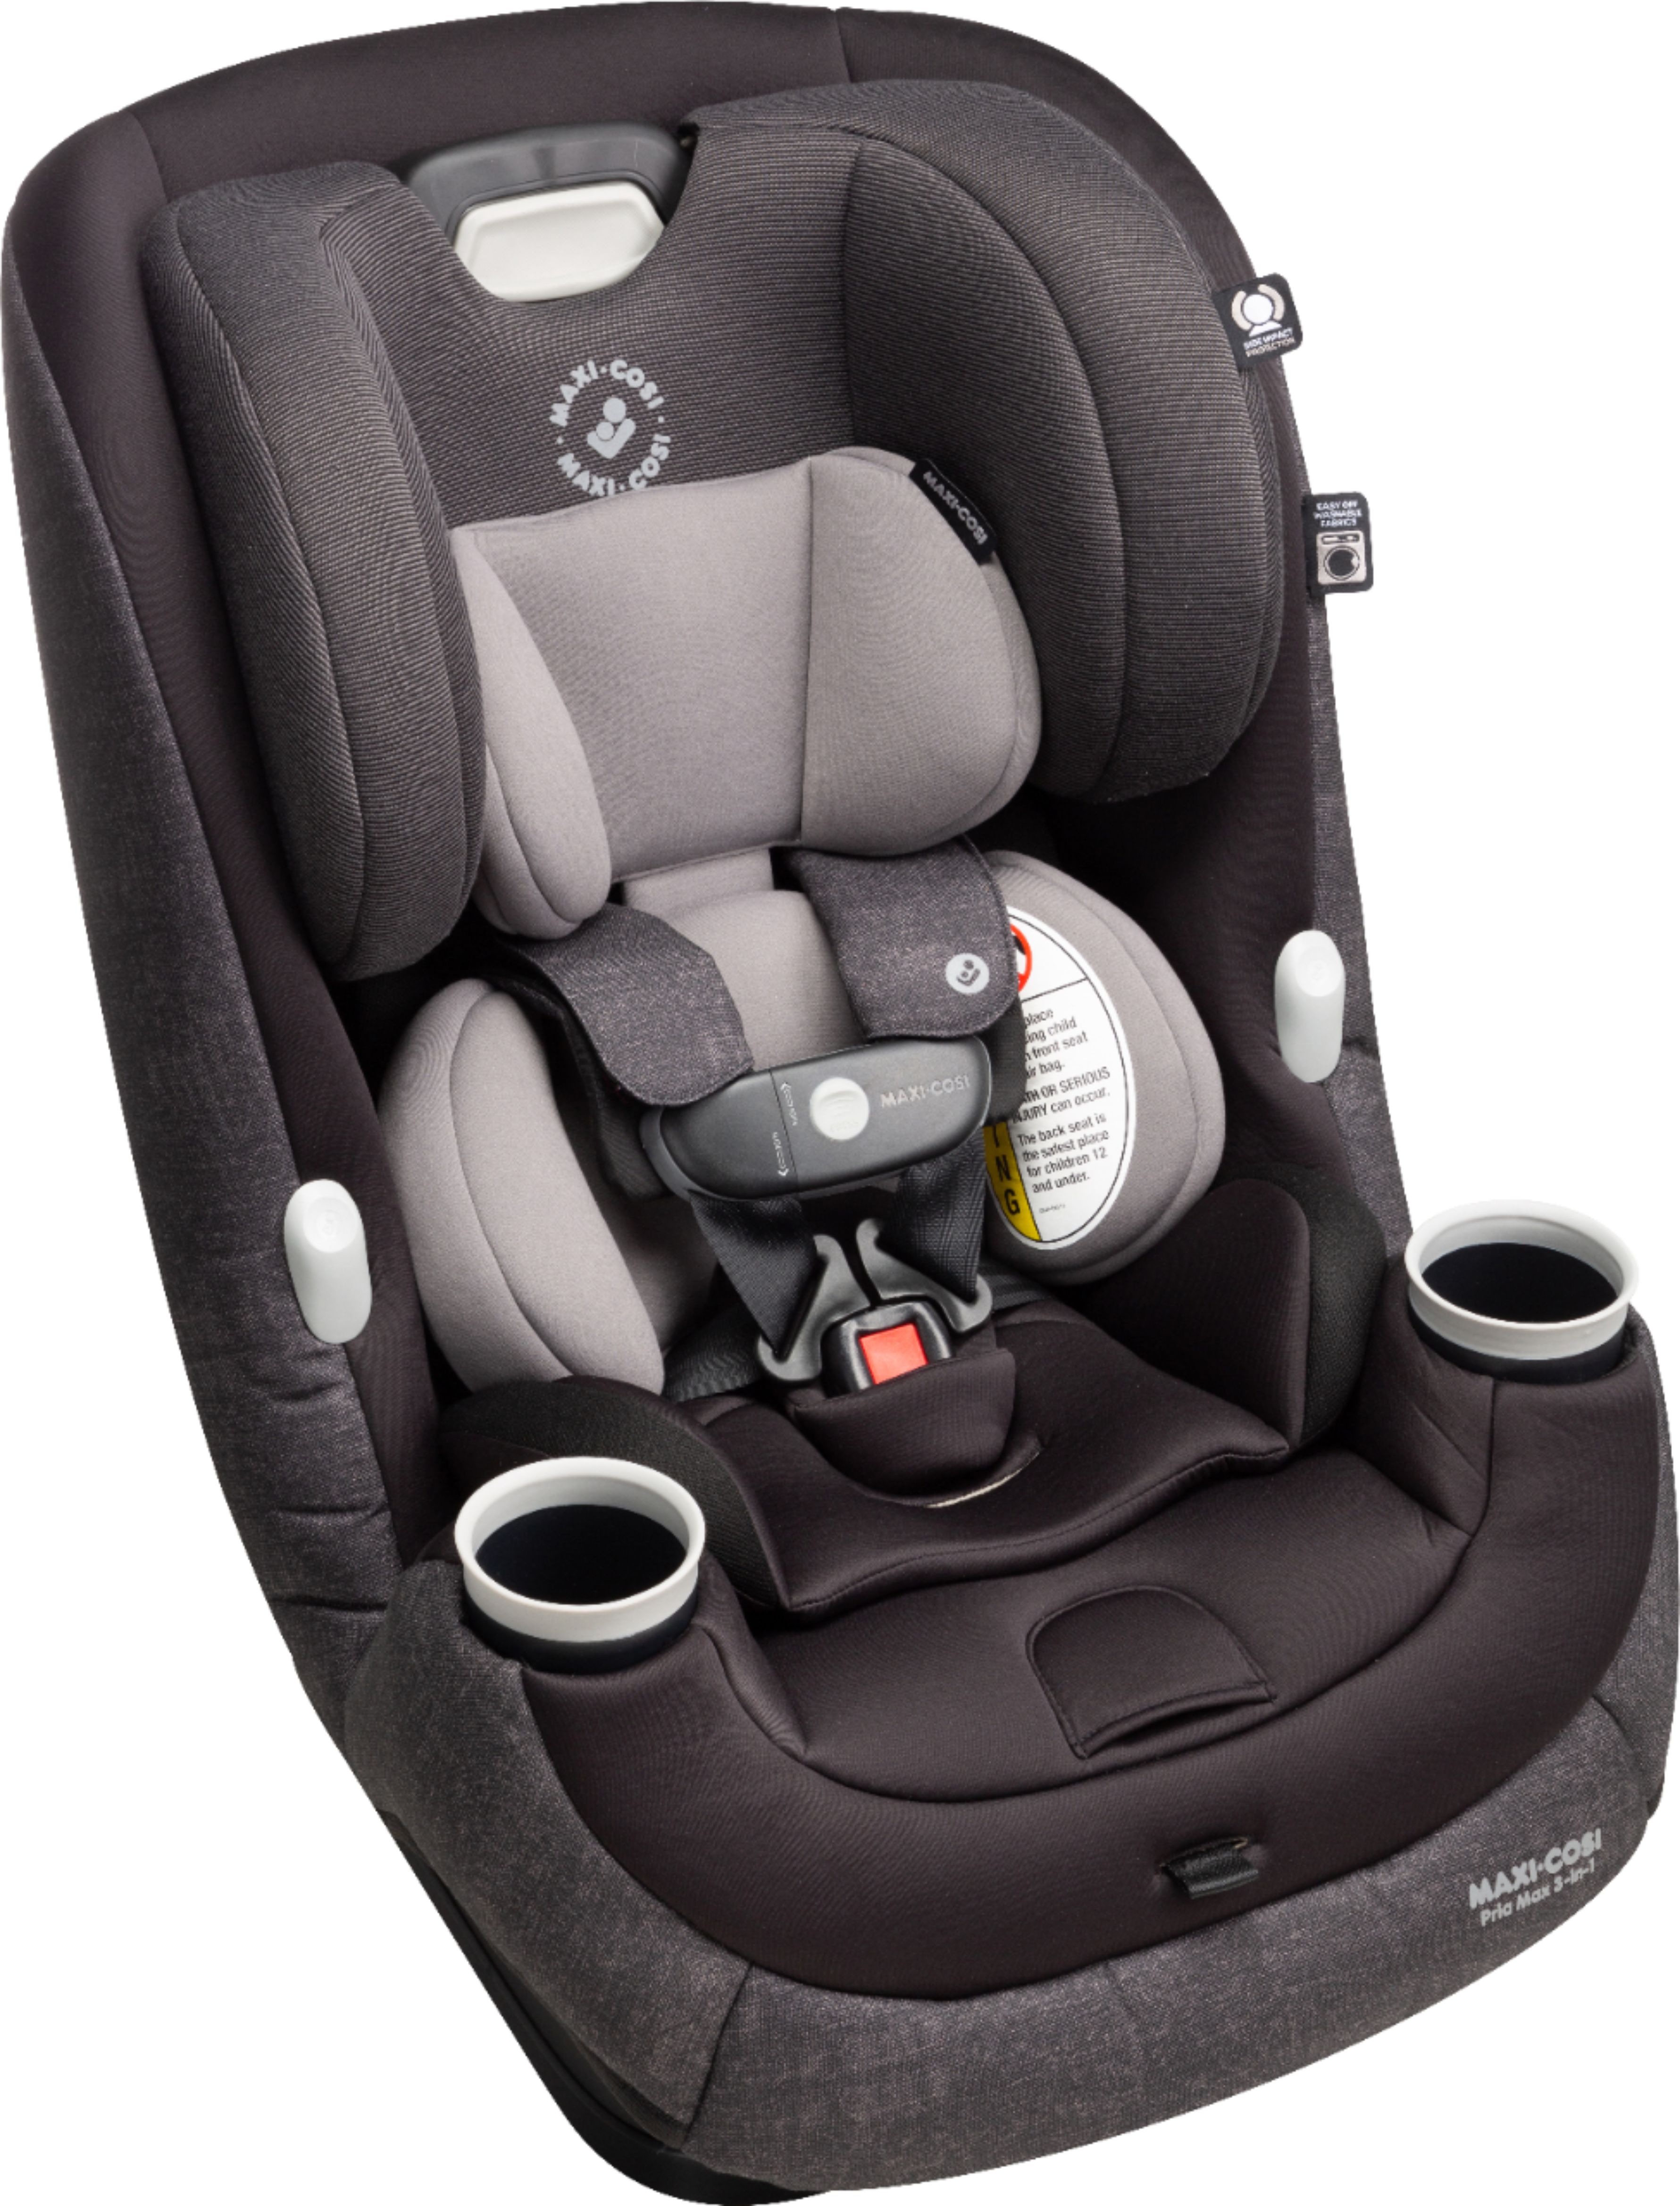 Angle View: Maxi-Cosi - Pria Max All-in-One Convertible Car Seat - Black